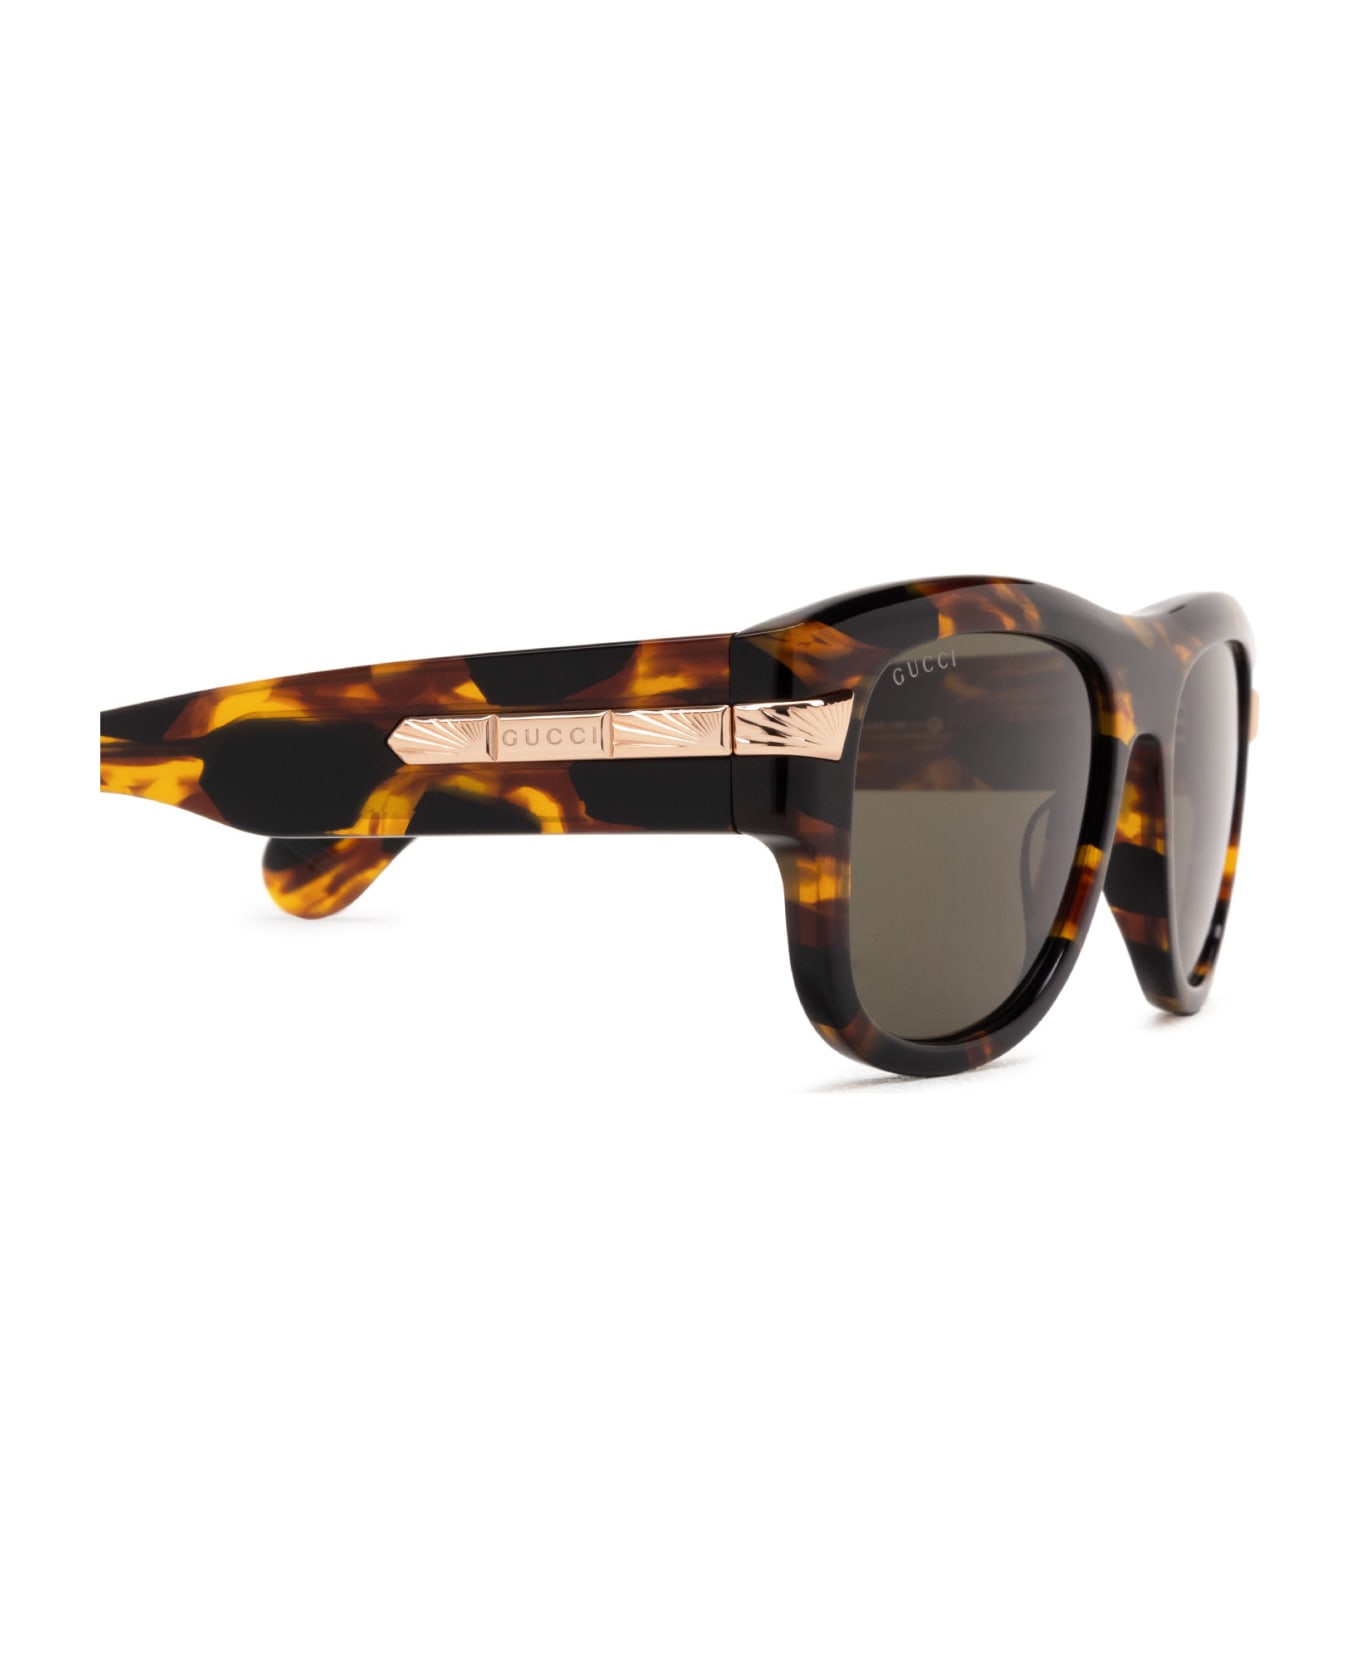 Gucci Eyewear Gg1517s Havana Sunglasses - Havana サングラス